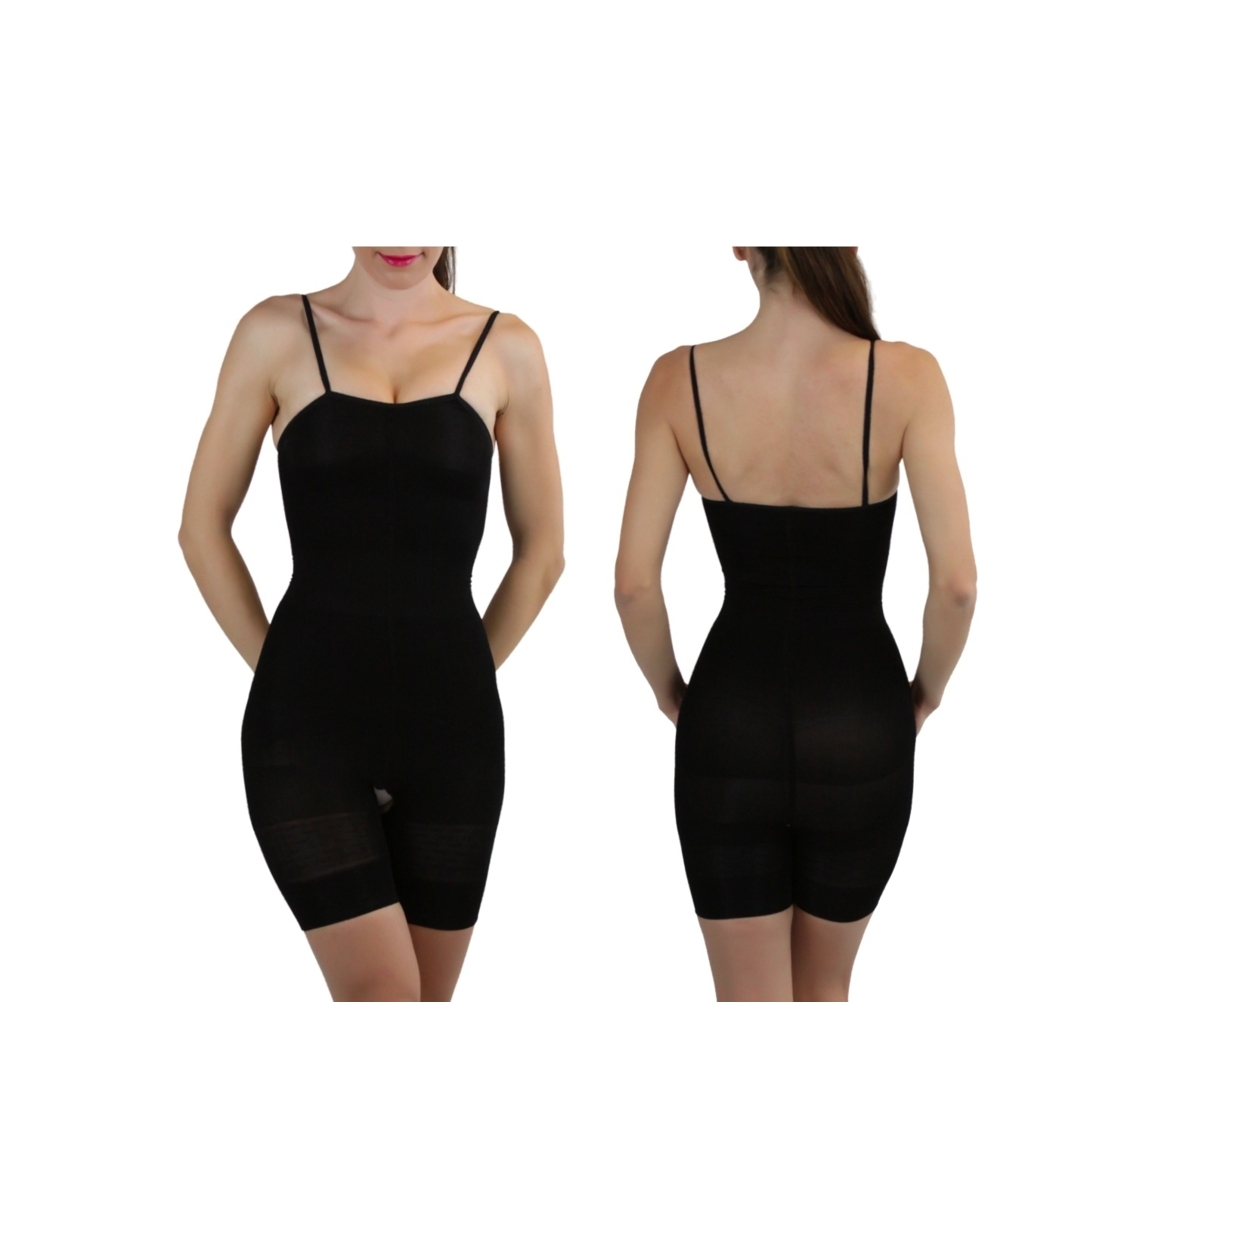 Women's Slimming Body Suit - Black, S